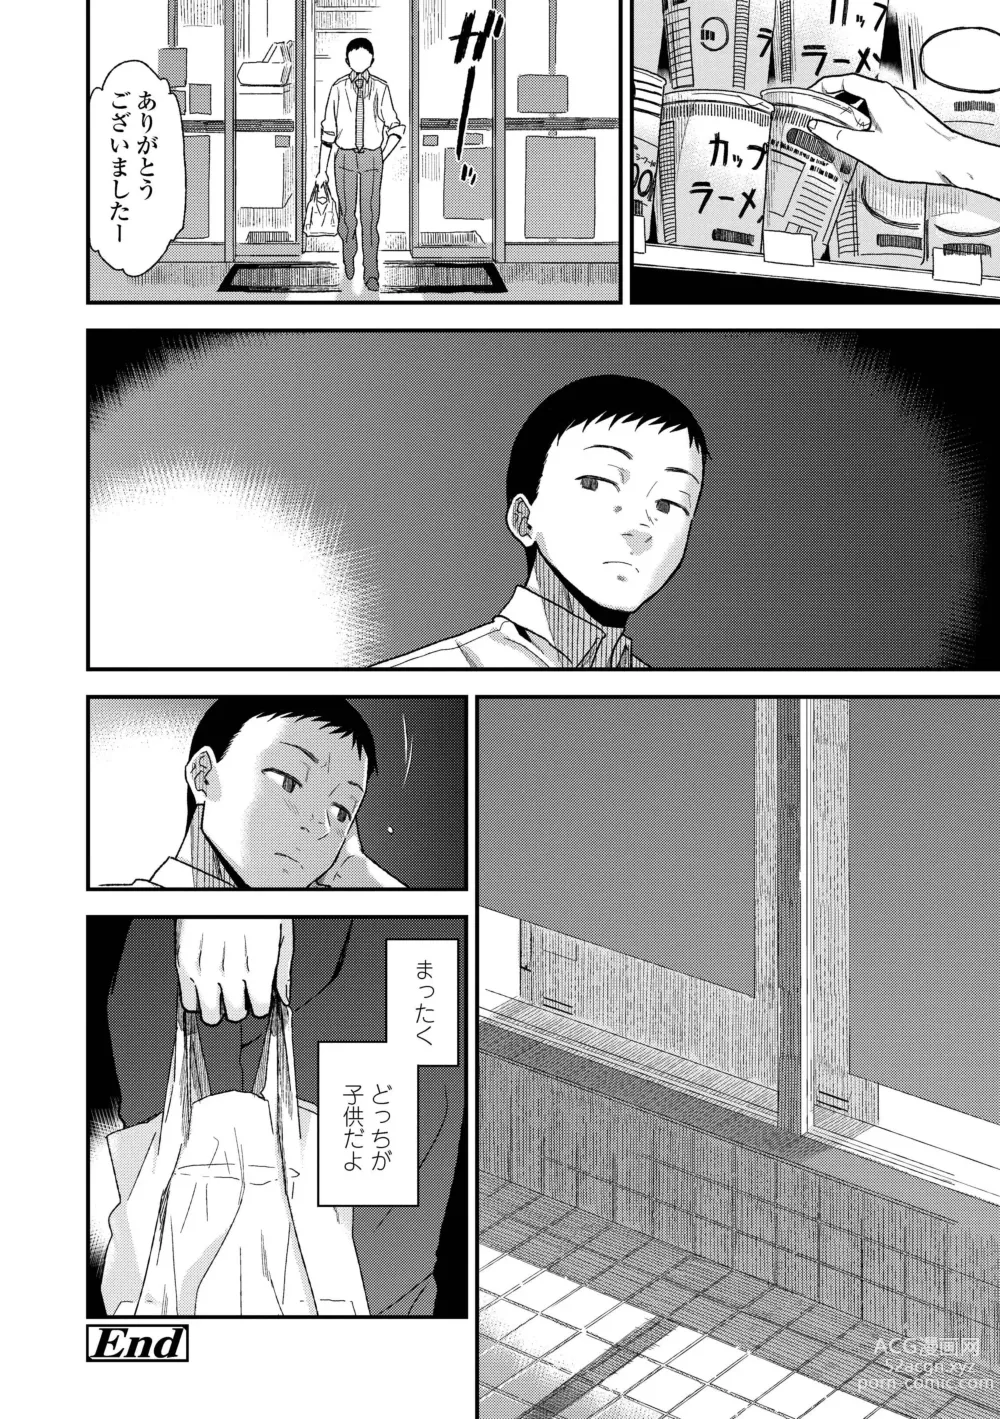 Page 26 of manga BorderLine